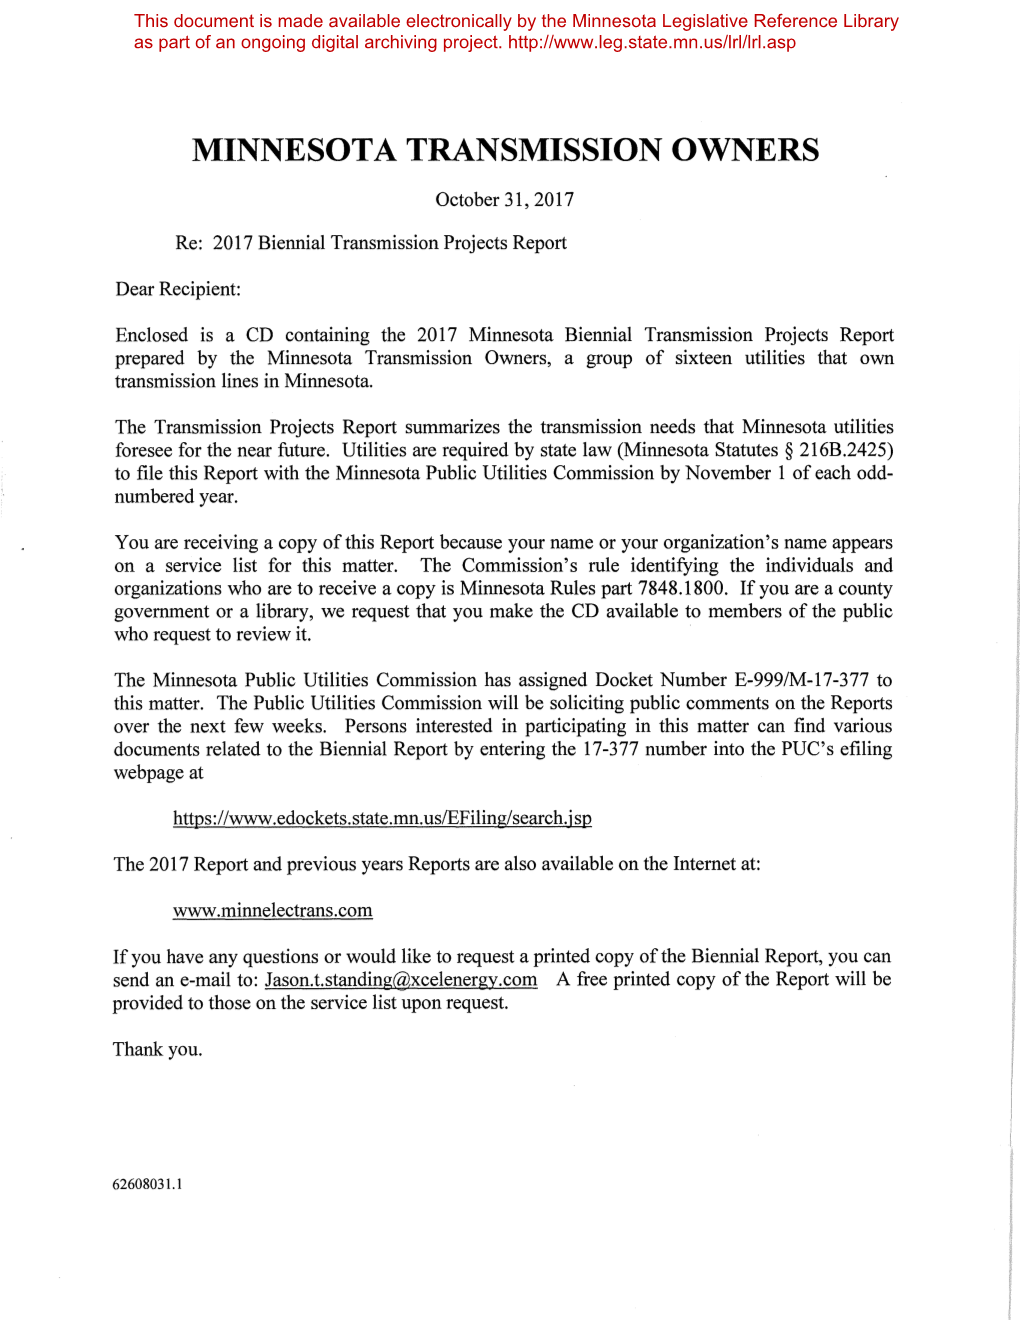 Minnesota Transmission Owners